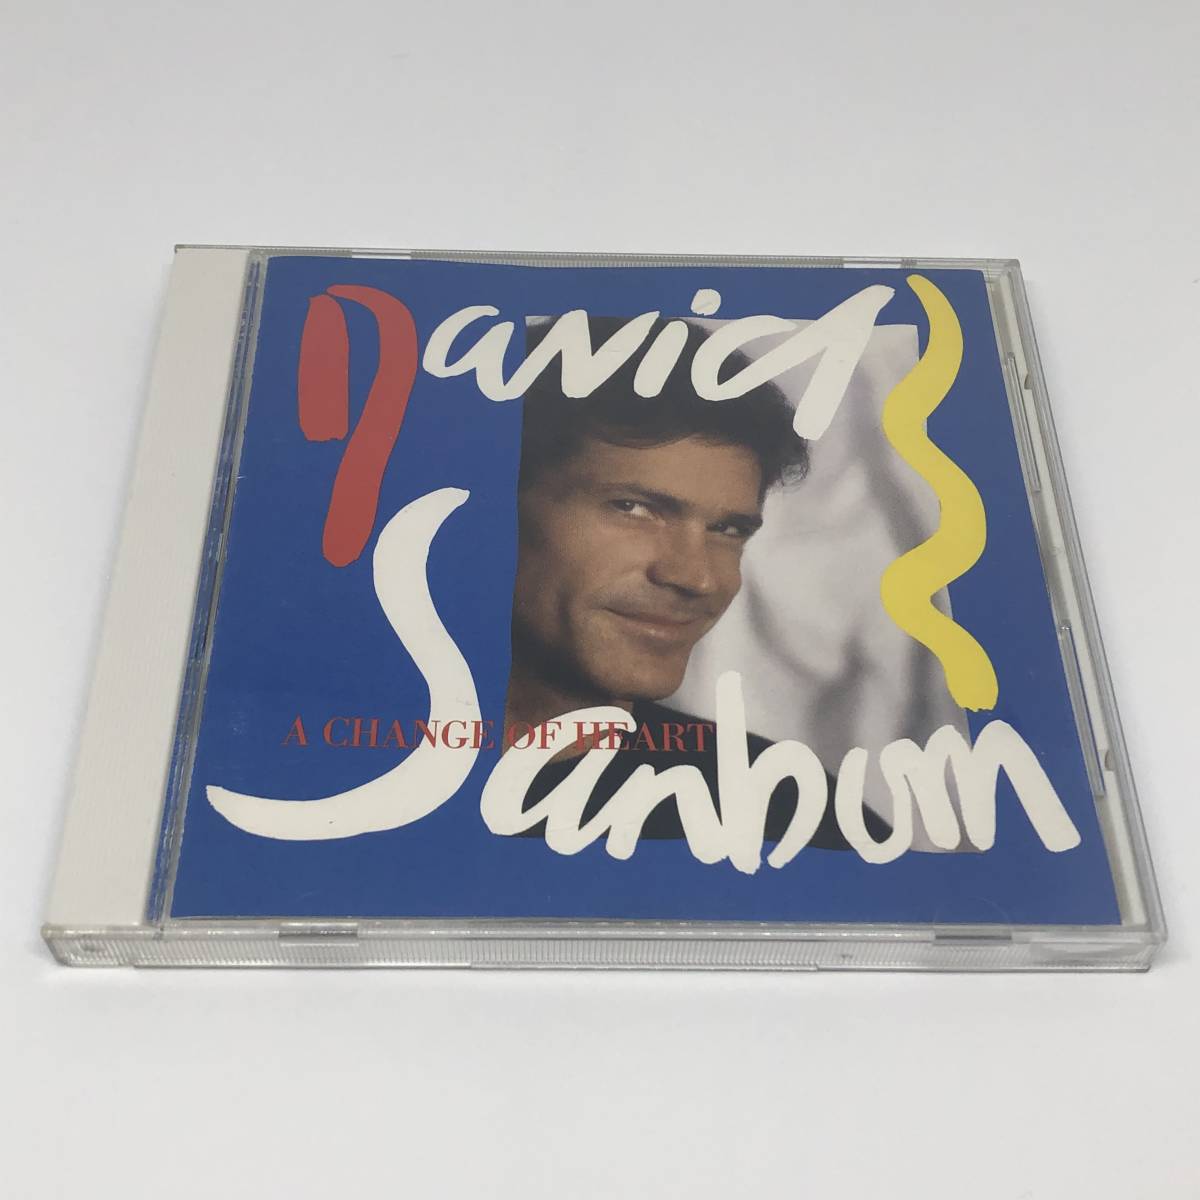 US盤 中古CD David Sanborn A Change Of Heart デイヴィッド・サンボーン チェンジ・オブ・ハート Warner Bros. 9 25479-2_画像1